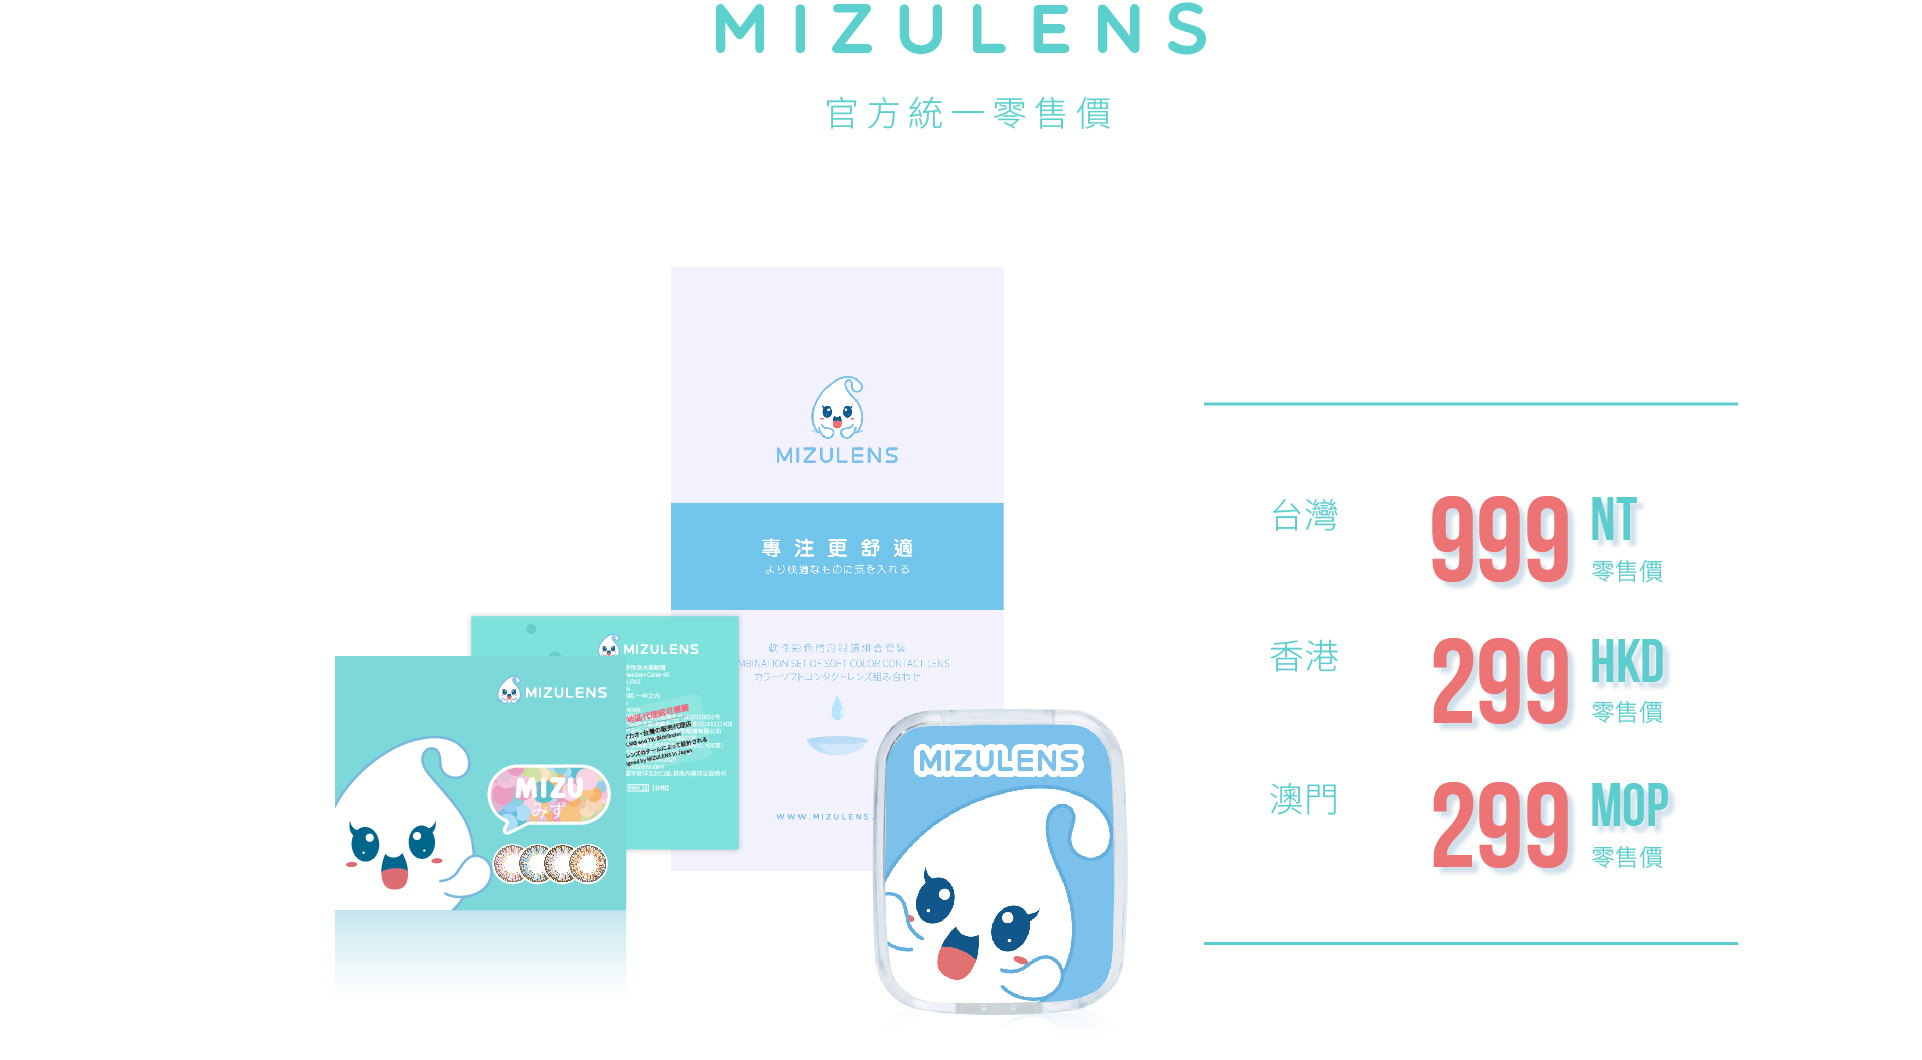 MIZULENS炫彩系列-浪の漫產品價格，台灣：999NT；香港：299HKD；澳門：299MOP；